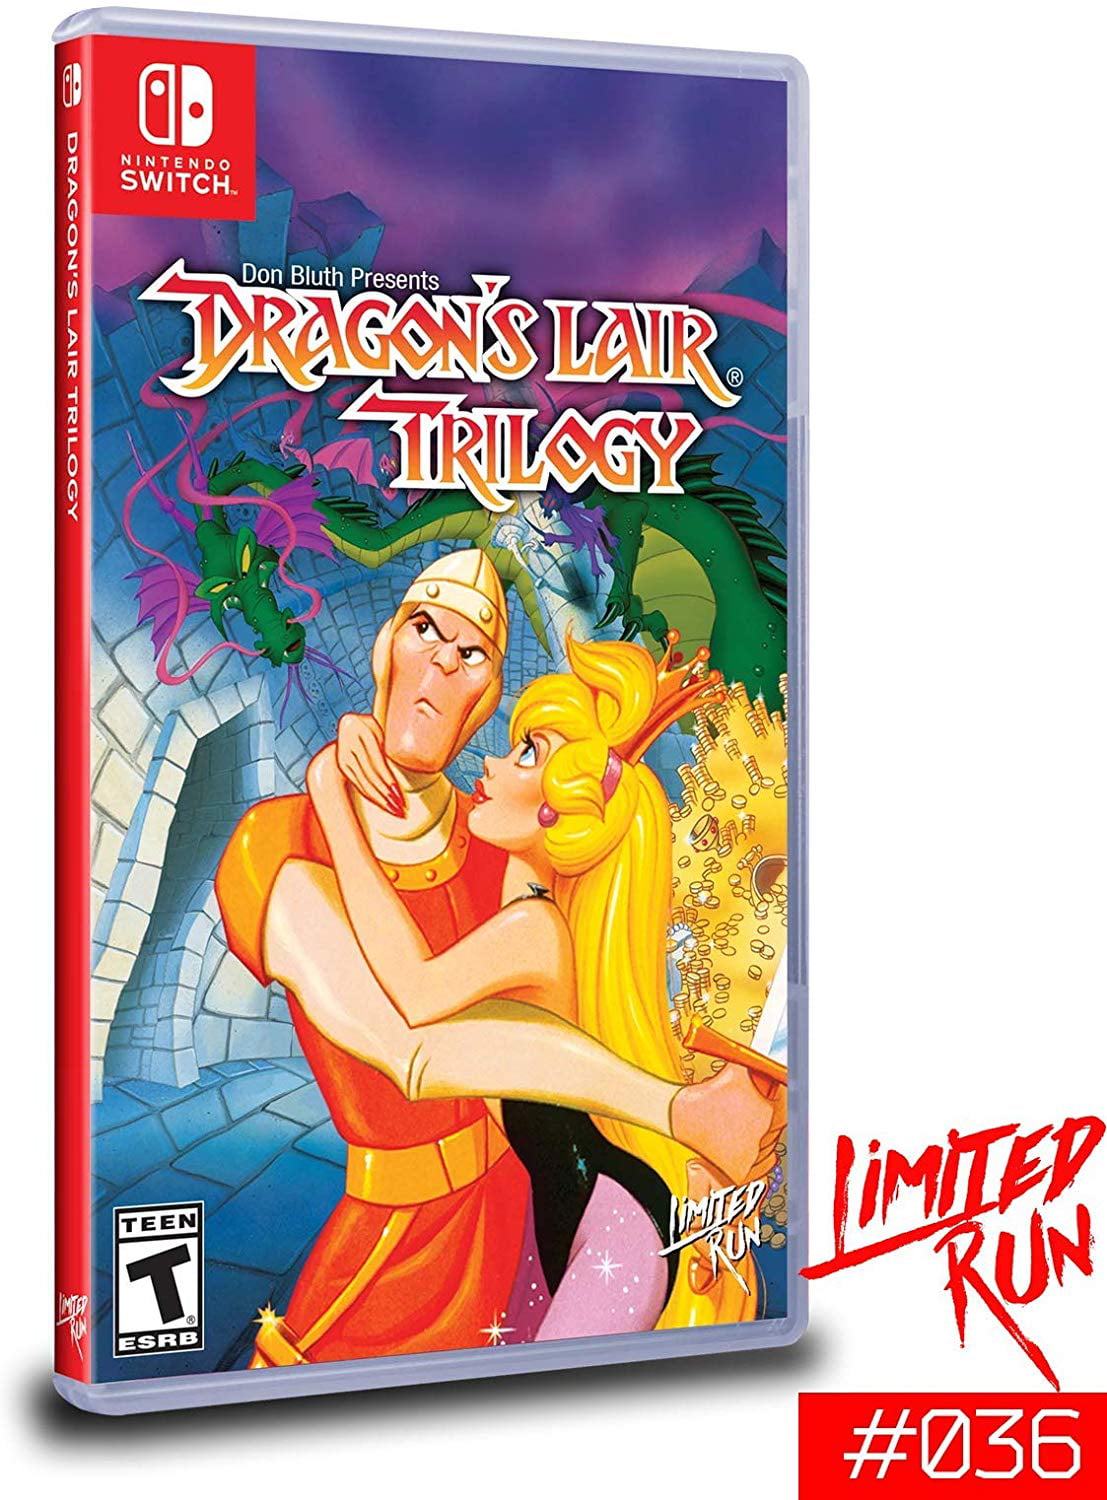 Dragon S Lair Trilogy Limited Run 36 Nintendo Switch Walmart Com Walmart Com